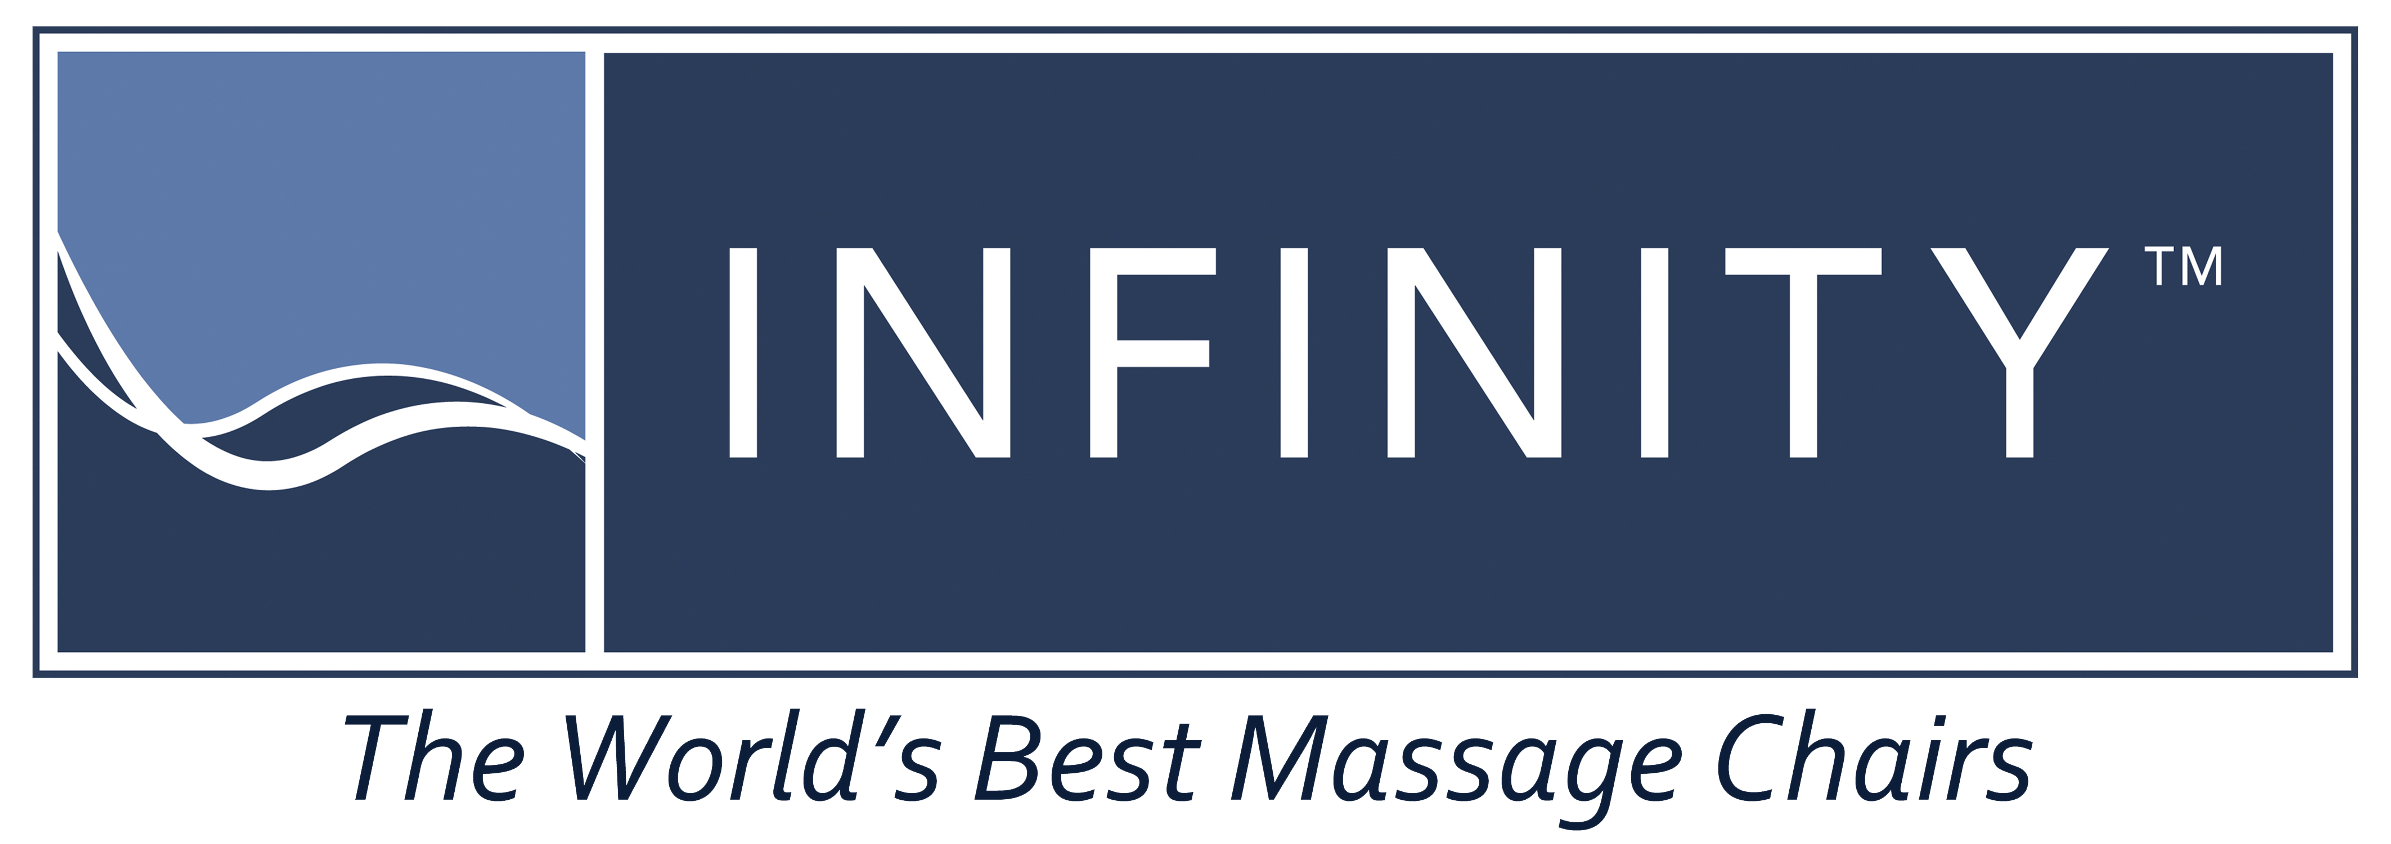 mattress firm infinity massage chairs